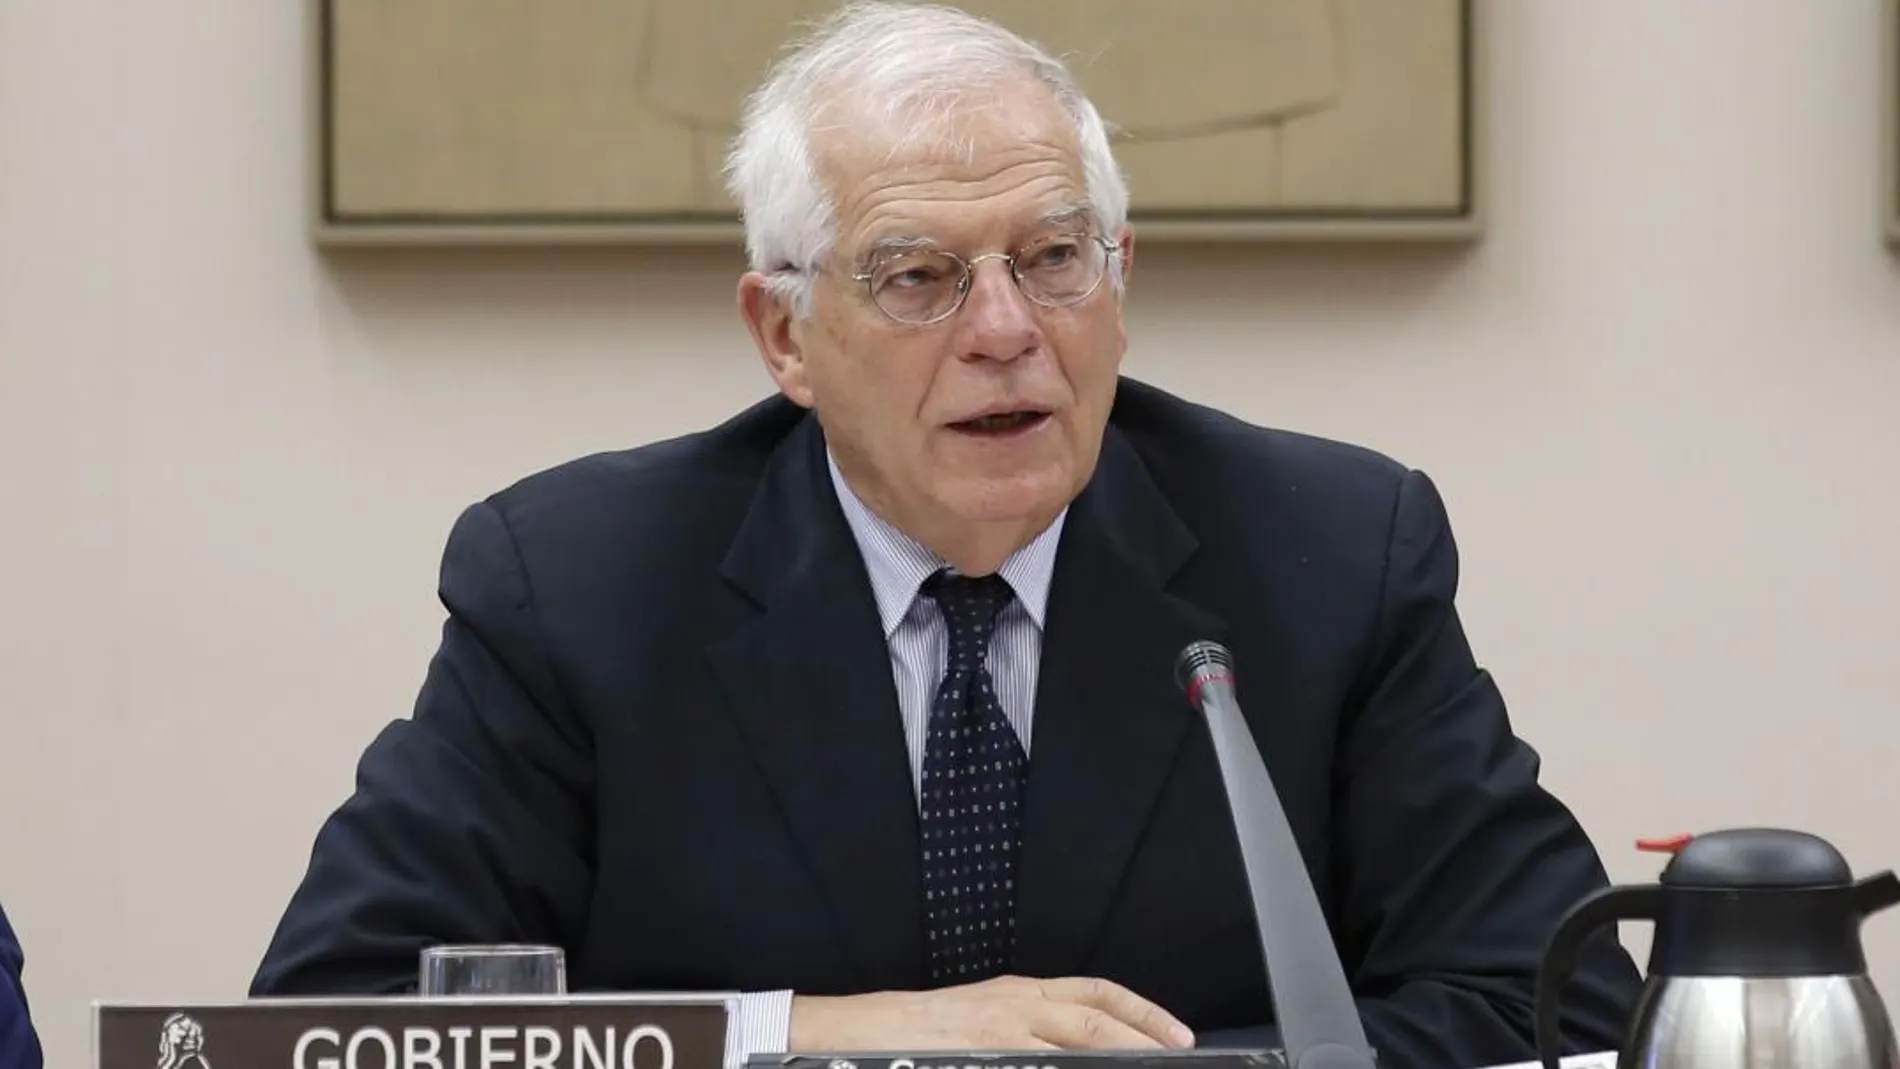 El Ministro de Asuntos Exteriores, Josep Borrell/ Foto: J. Fdez.-Largo